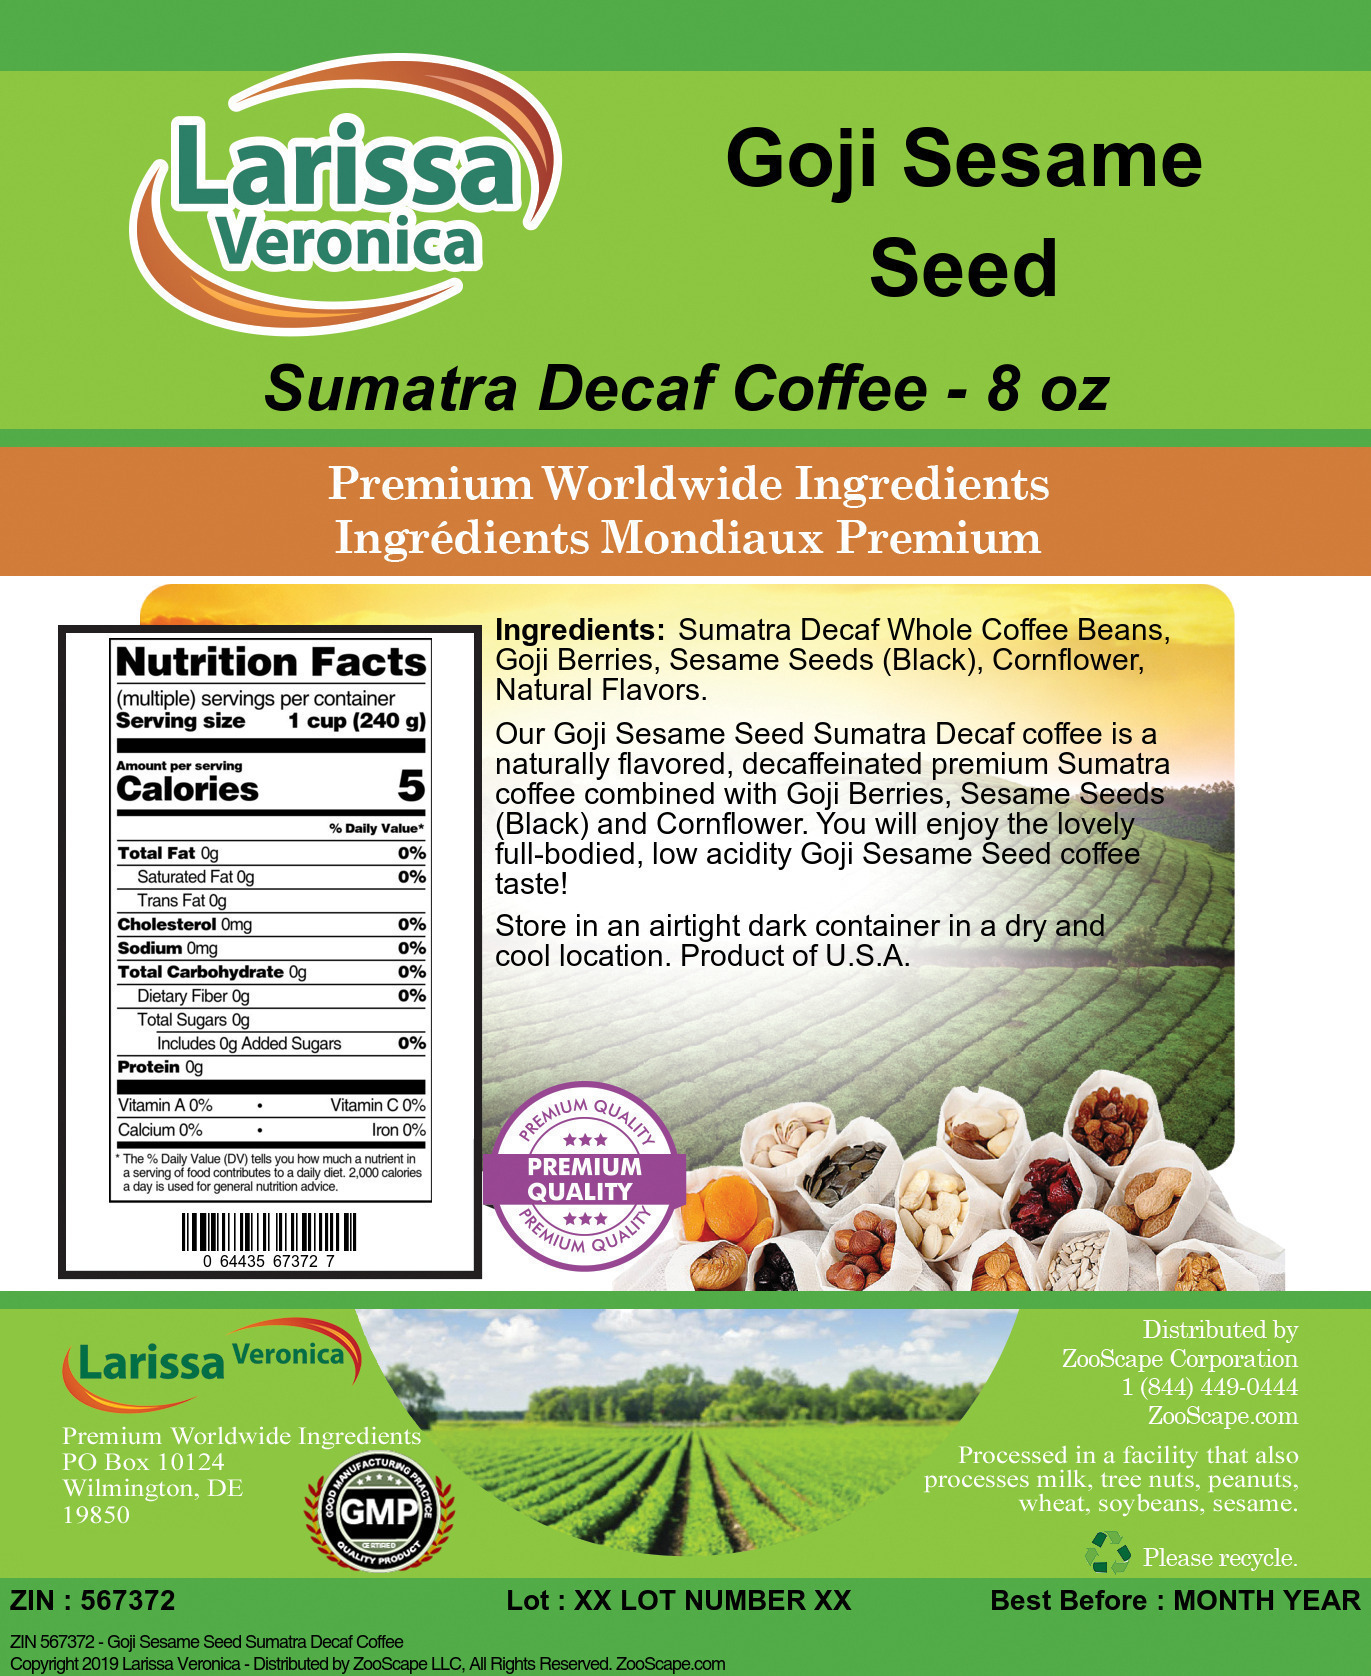 Goji Sesame Seed Sumatra Decaf Coffee - Label